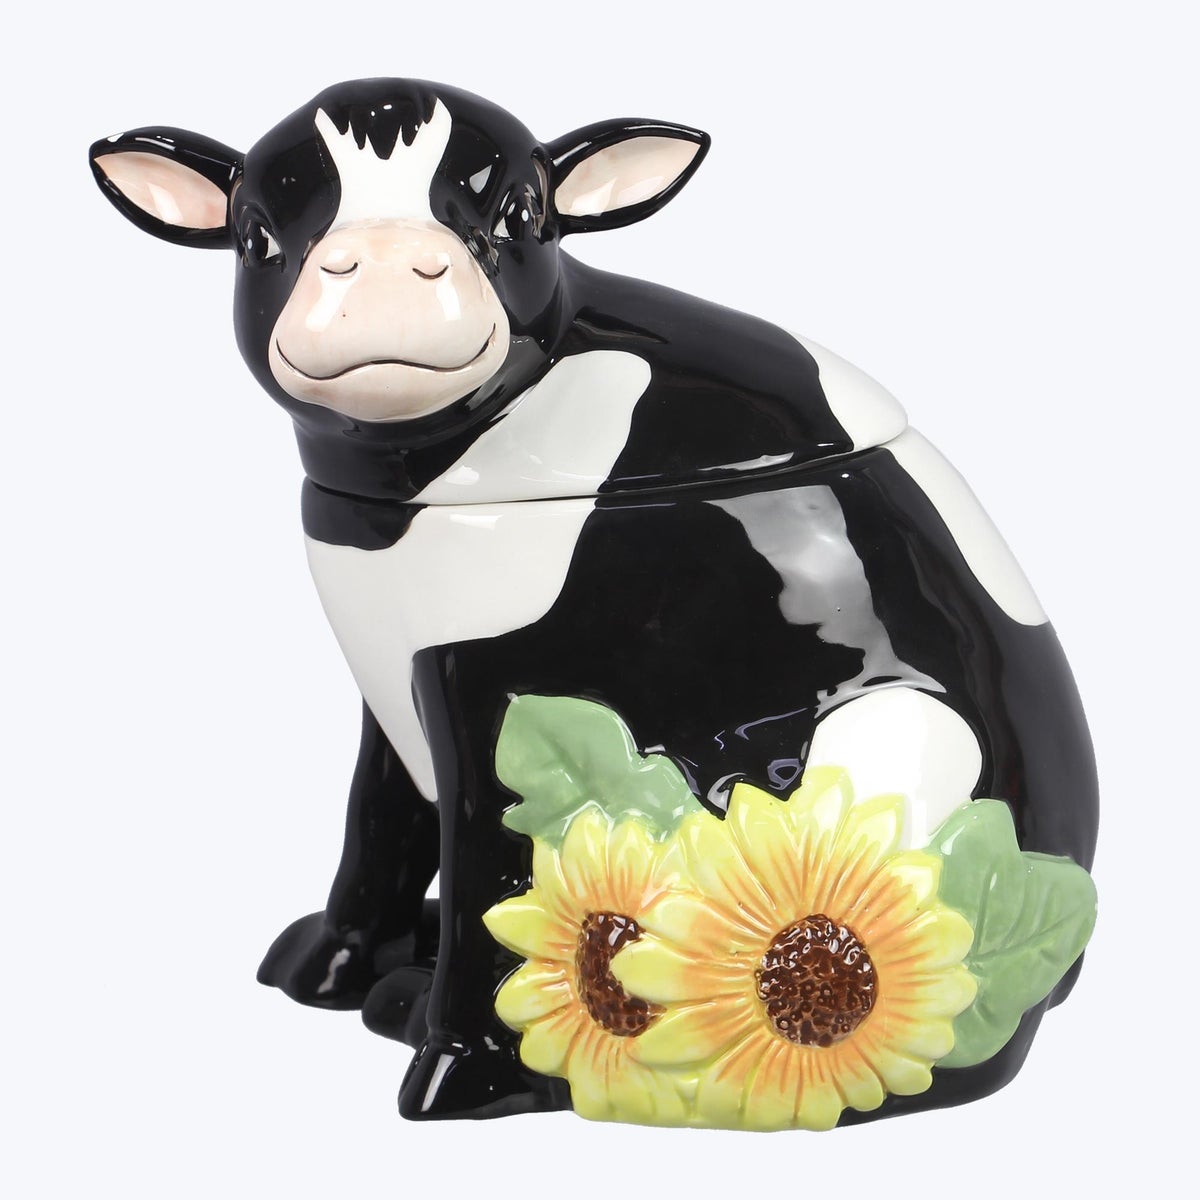 Ceramic Fall Autumn Market Cow with Sunflower Goodie Jar